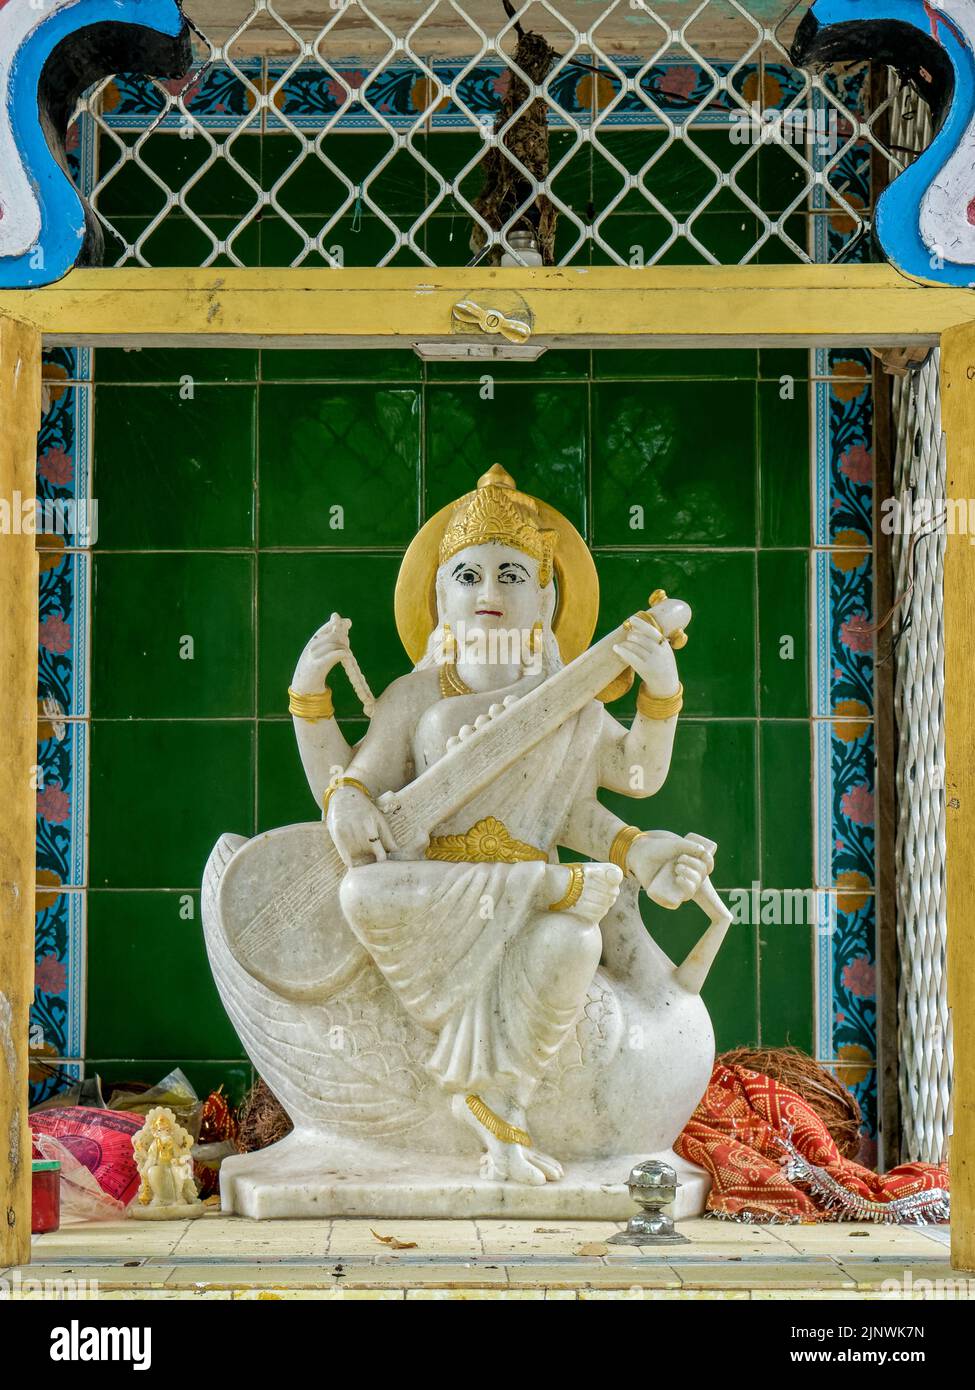 03 Nov 2019 Vintage Marble statue of Devi Saraswati Goddess of Knowledge inside compound of school Bhiloda Aravalli District Gujarat India Stock Photo